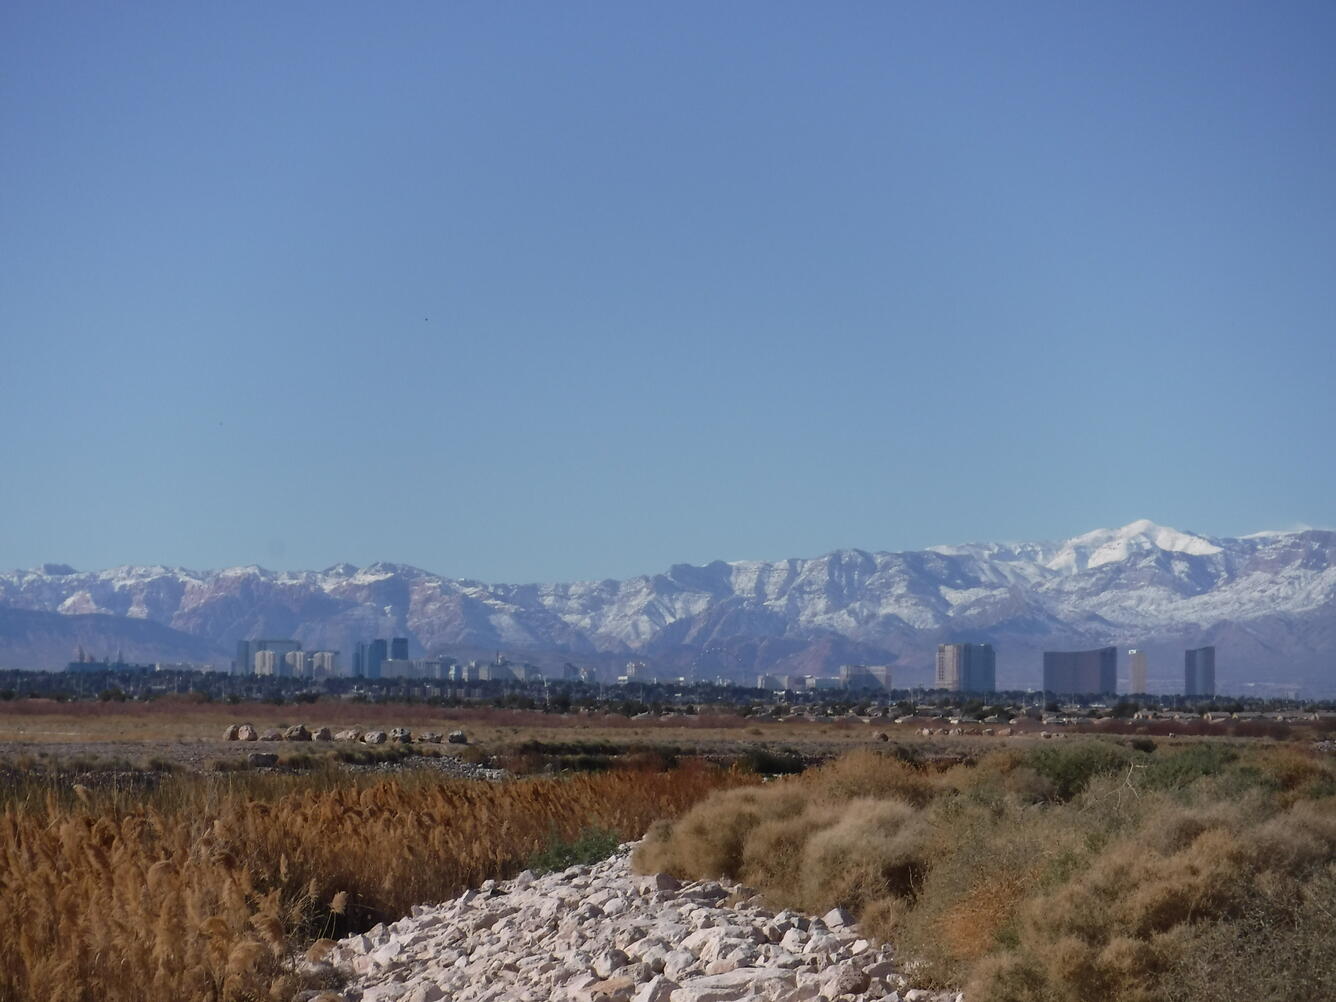 View of the Las Vegas Strip from Las Vegas Wash, Nevada